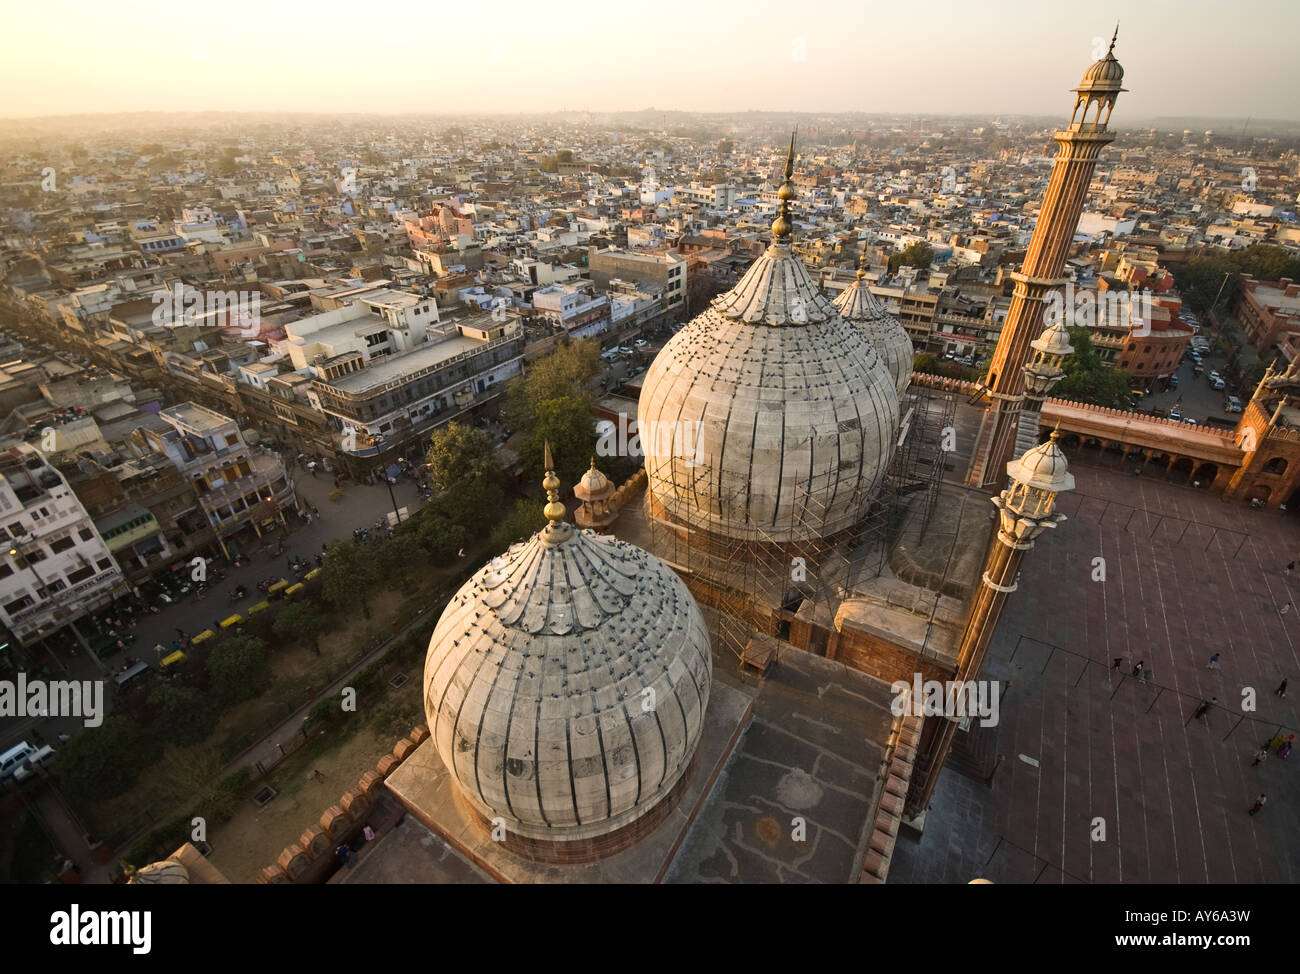 Une vue de Delhi à partir d'un minaret de la mosquée Jama Masjid à Delhi en Inde Banque D'Images